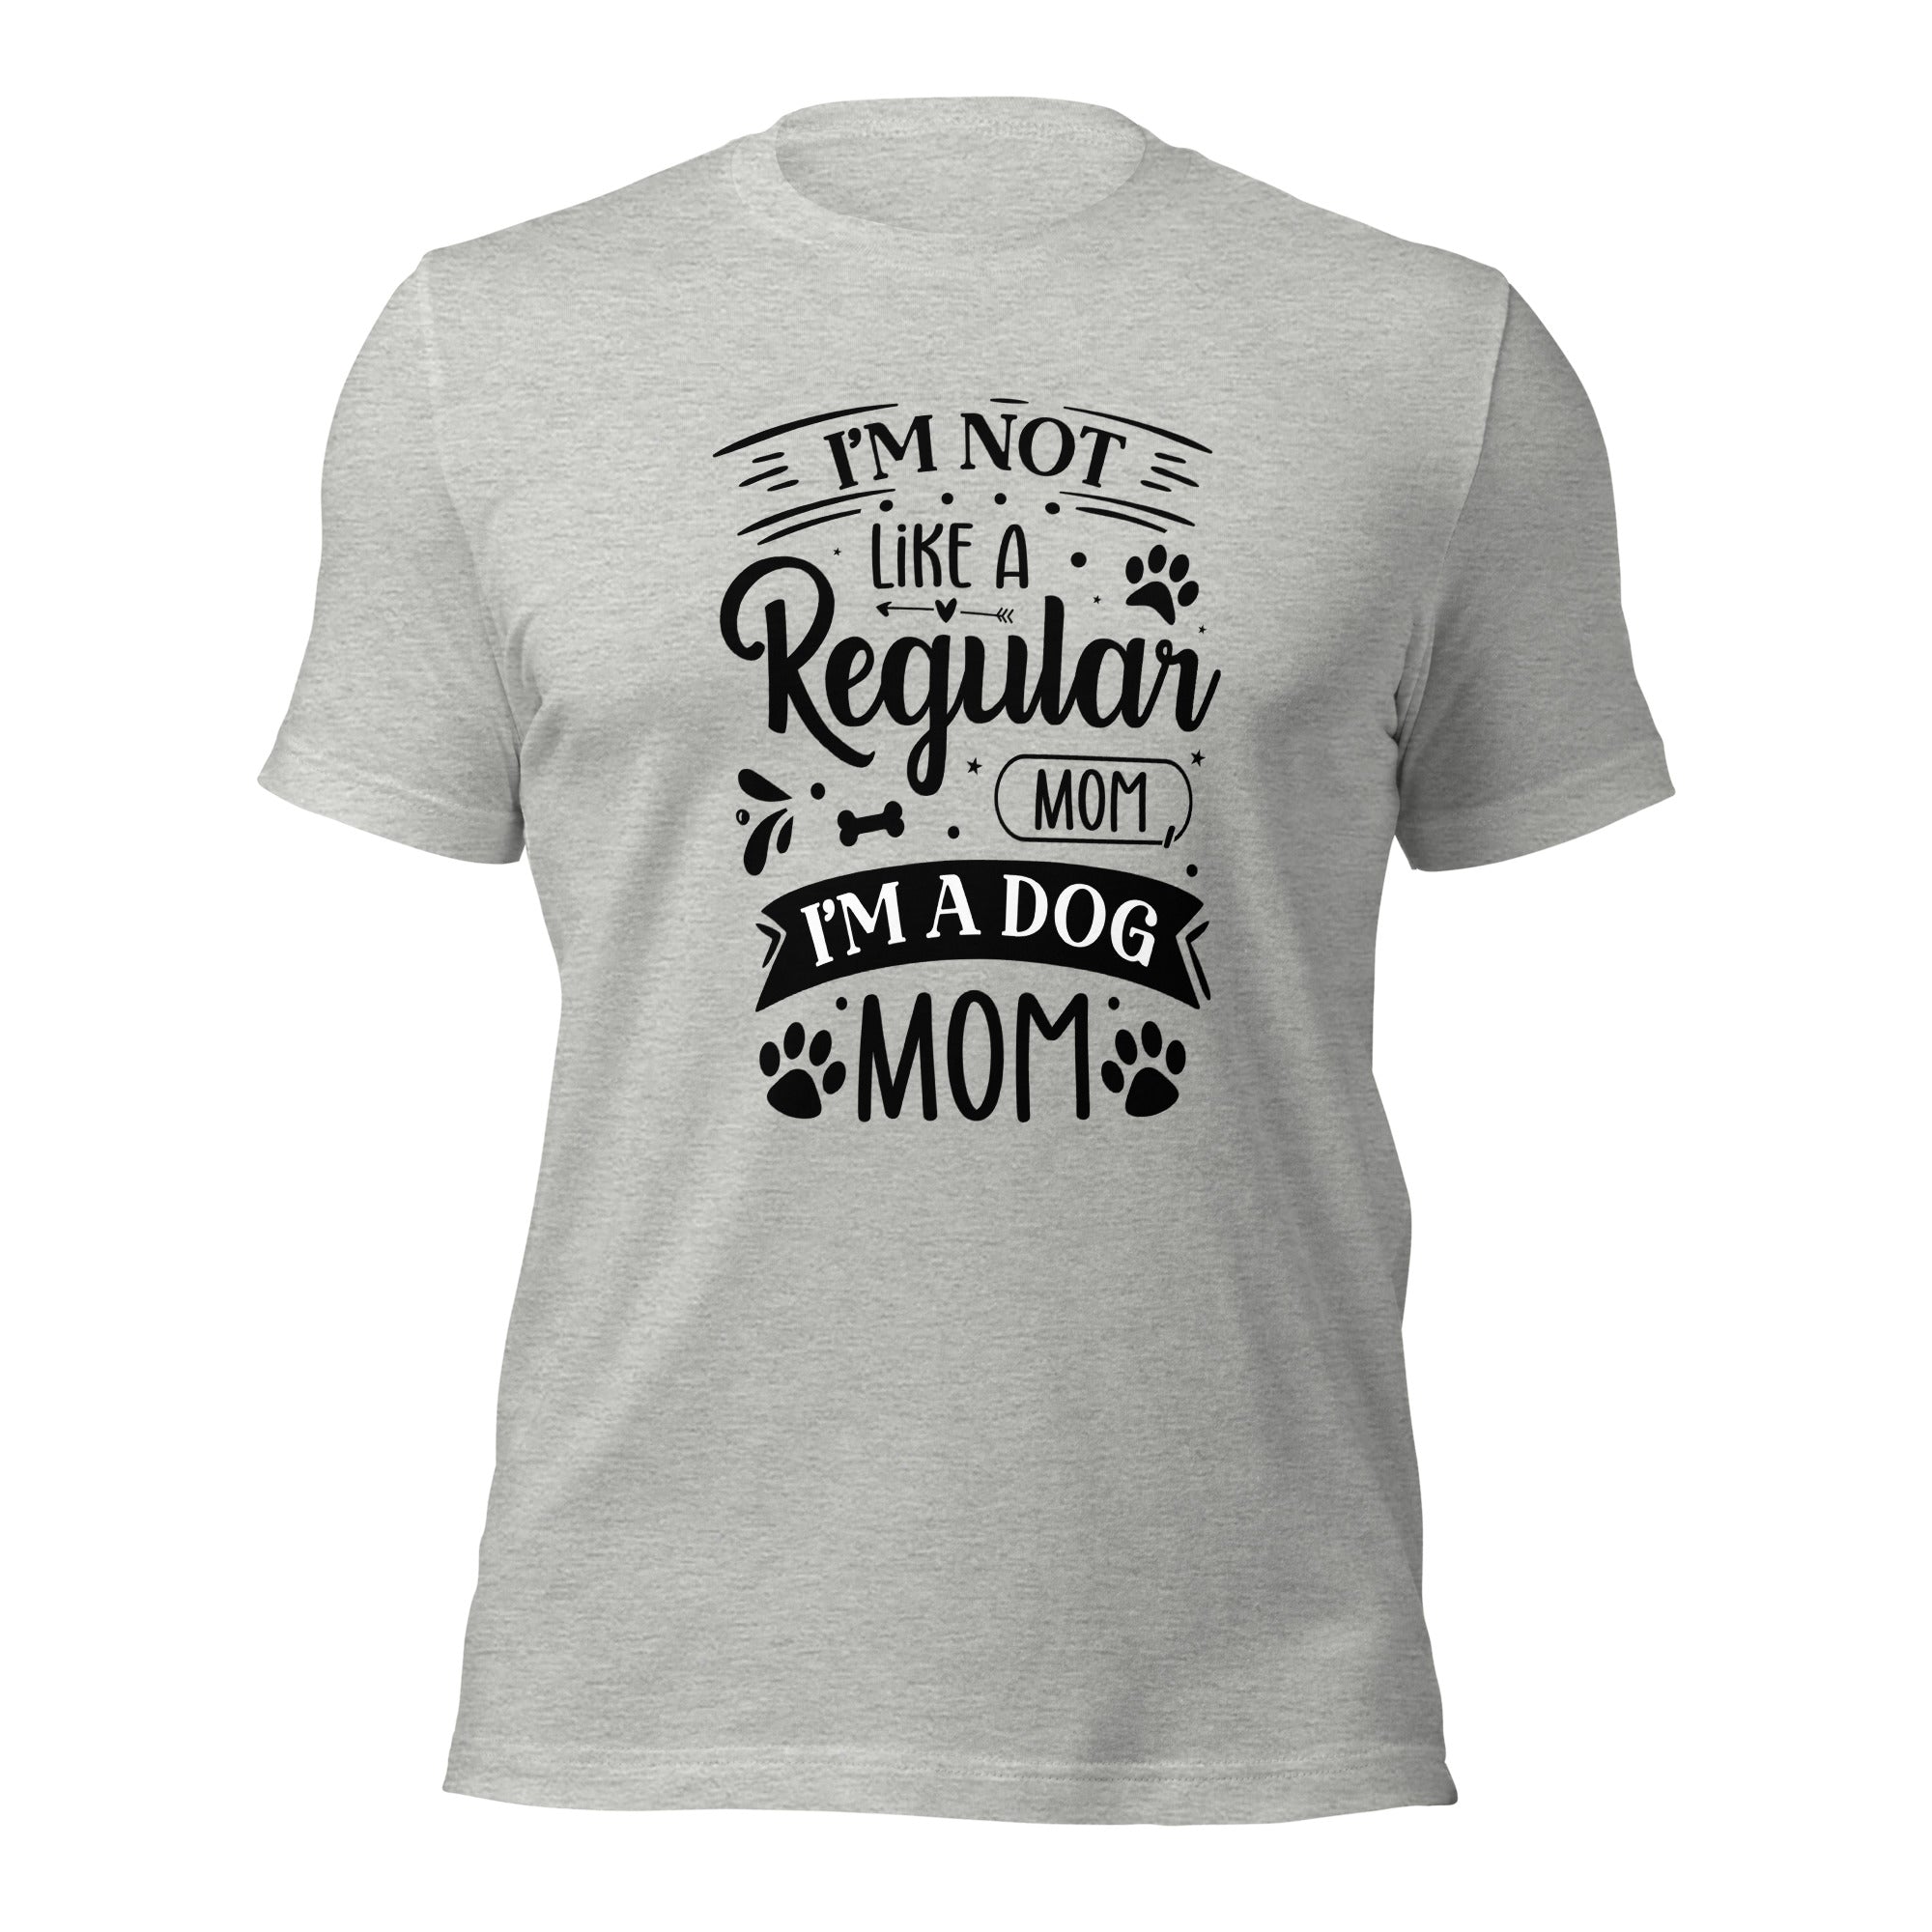 Unisex t-shirt- I'm Not Like A Regular Mom , I'm A Dog Mom